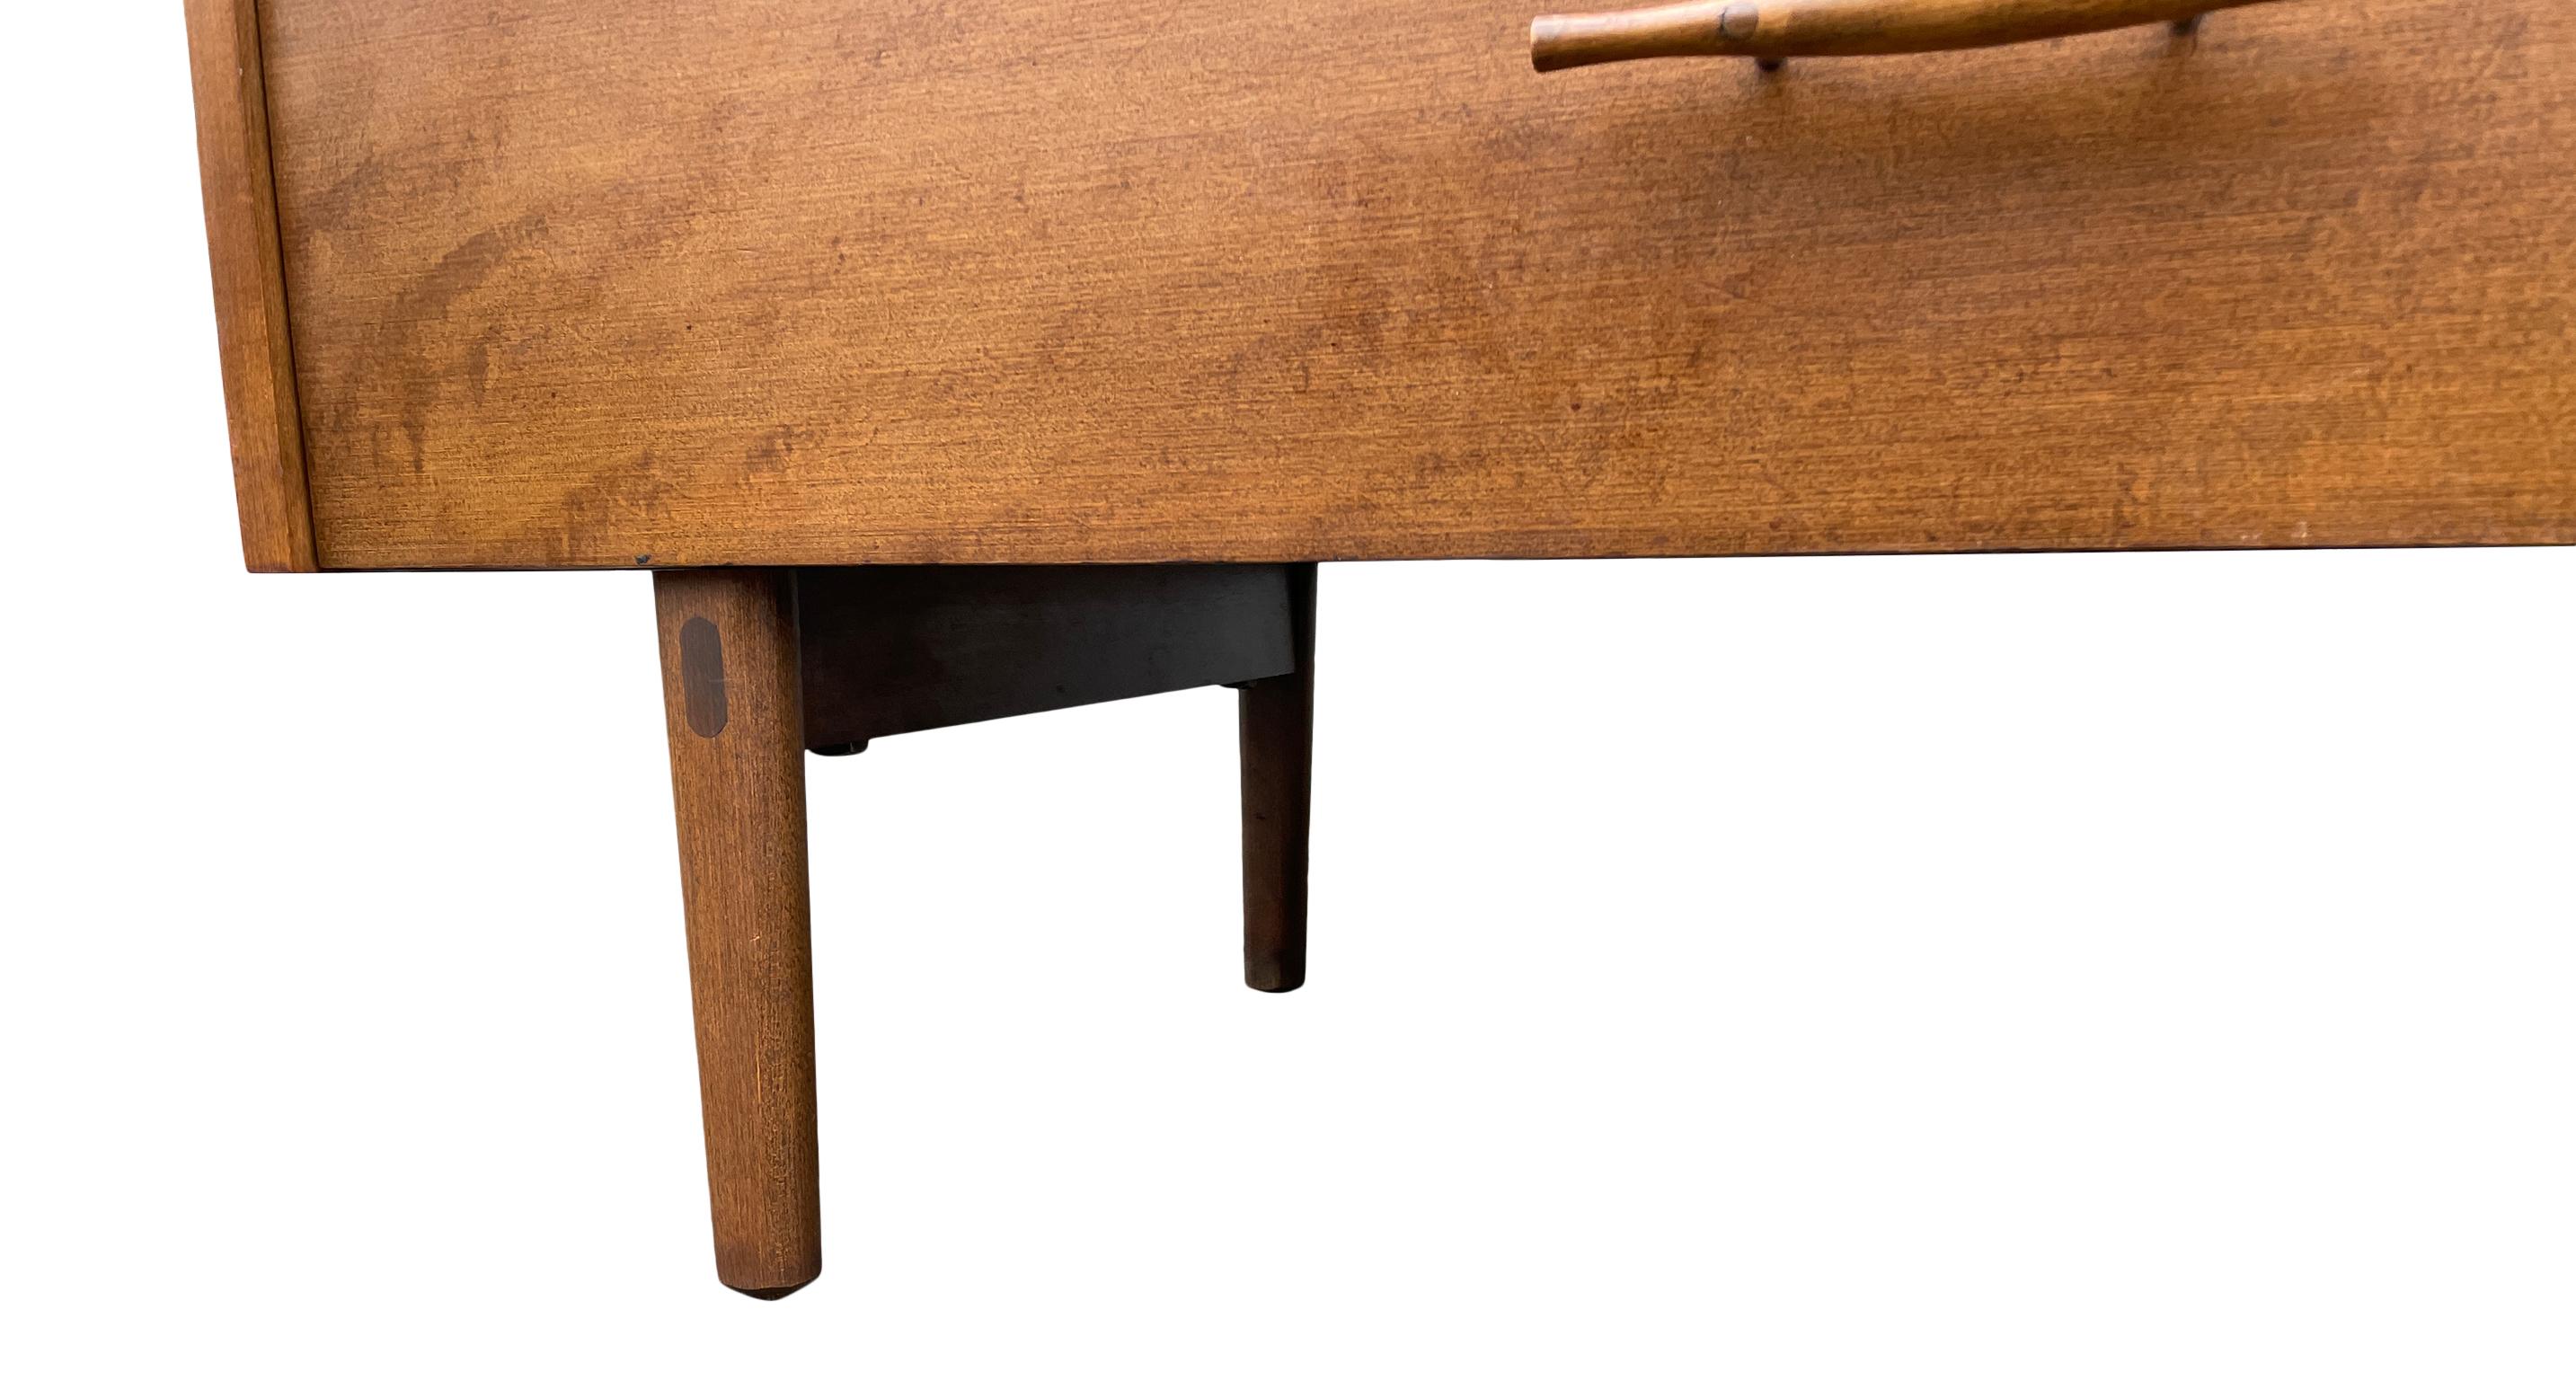 20th Century Midcentury Modern Paul McCobb 3-Drawer Dresser #1508 Walnut Finish Pull Handles For Sale